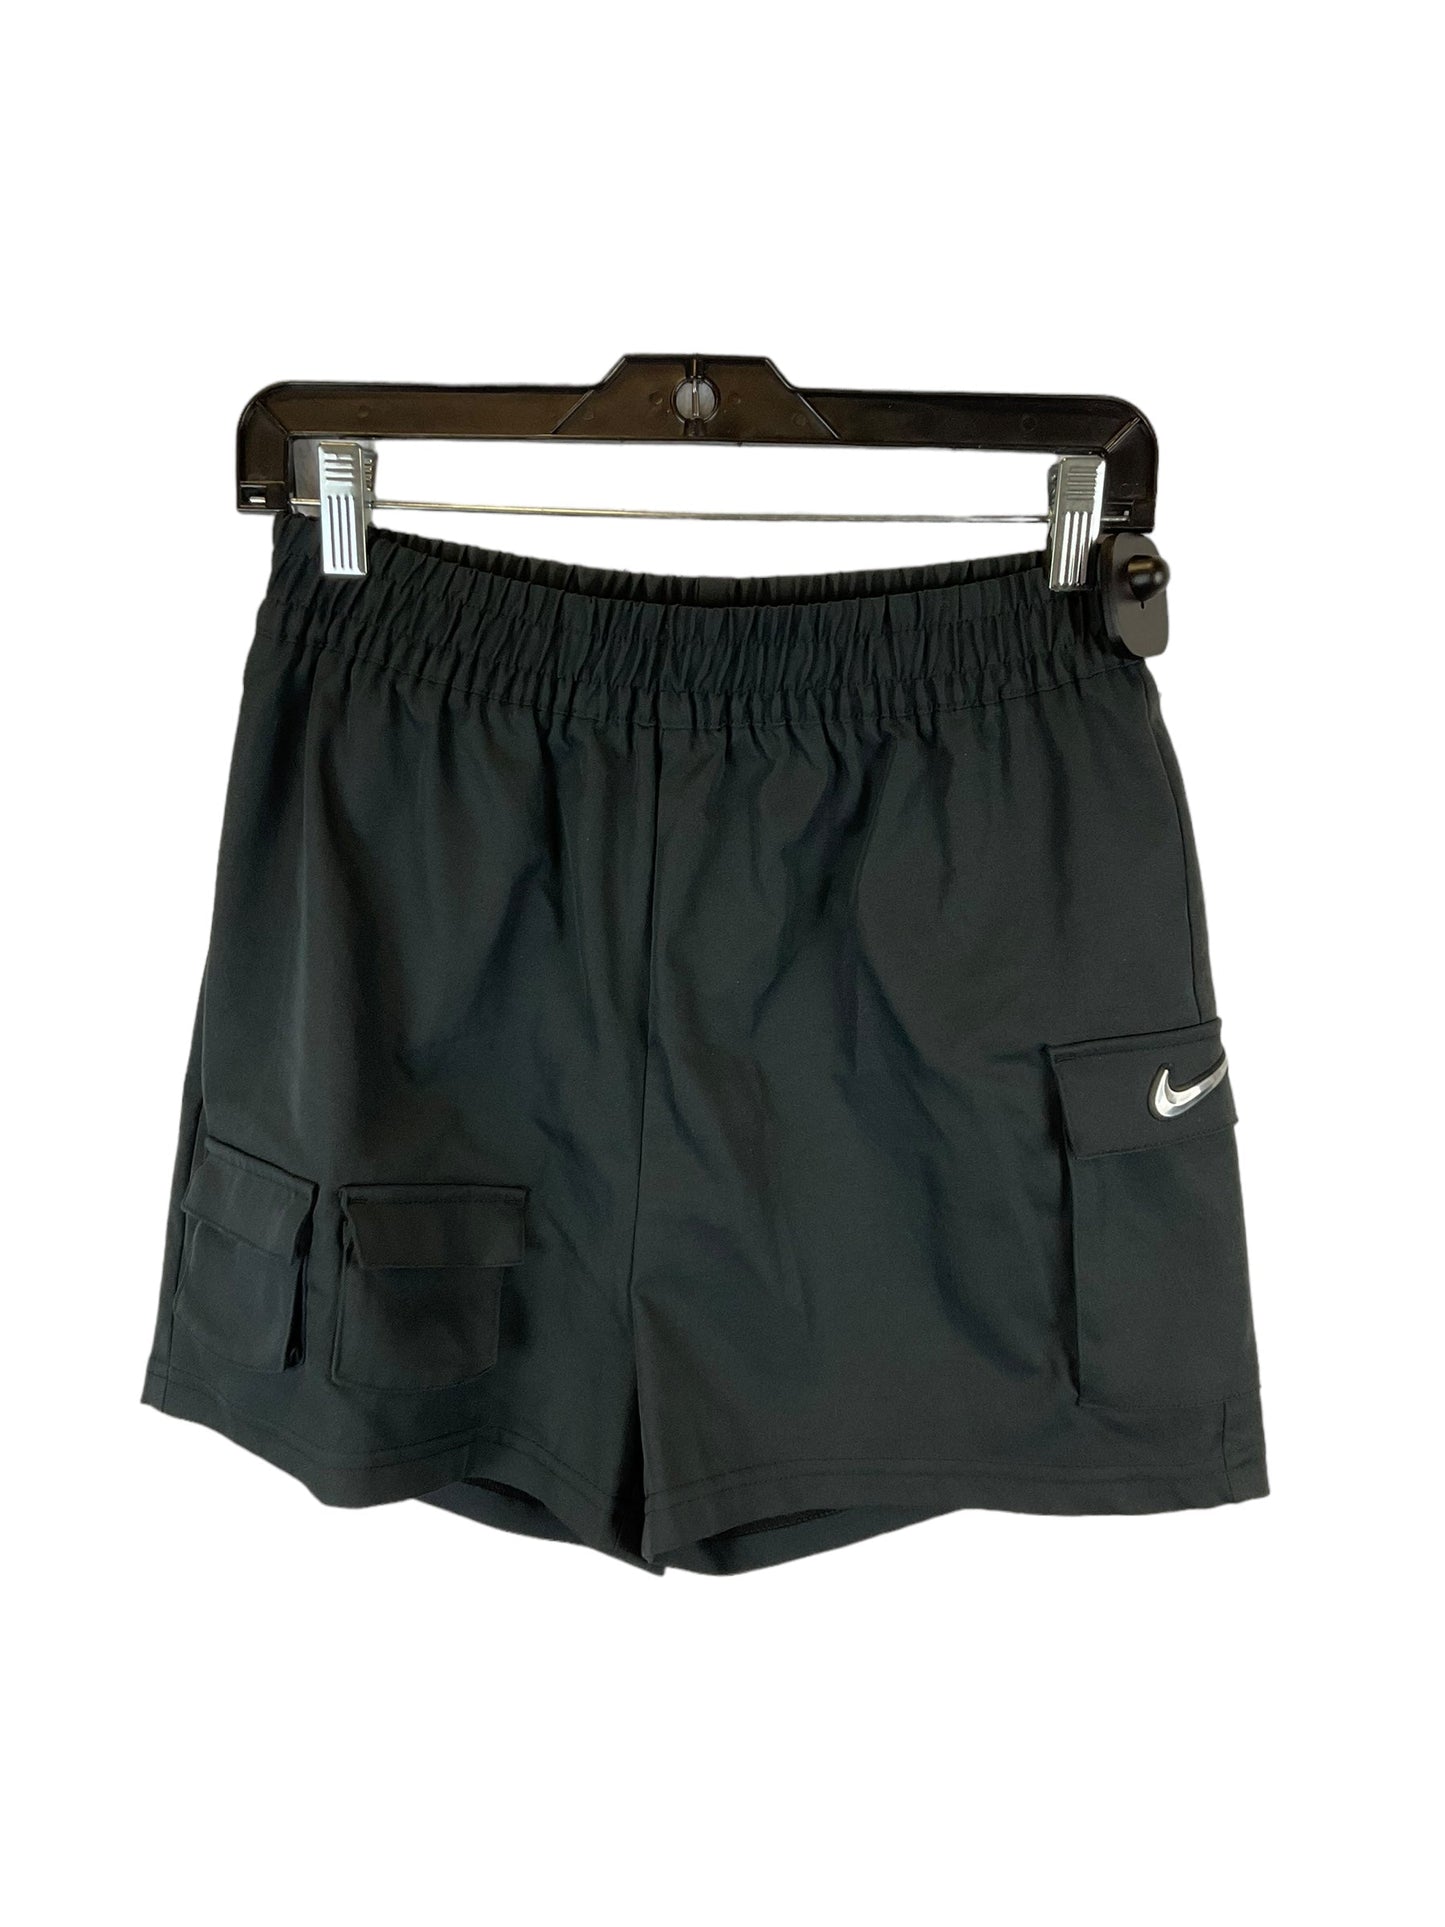 Black Shorts Nike Apparel, Size S